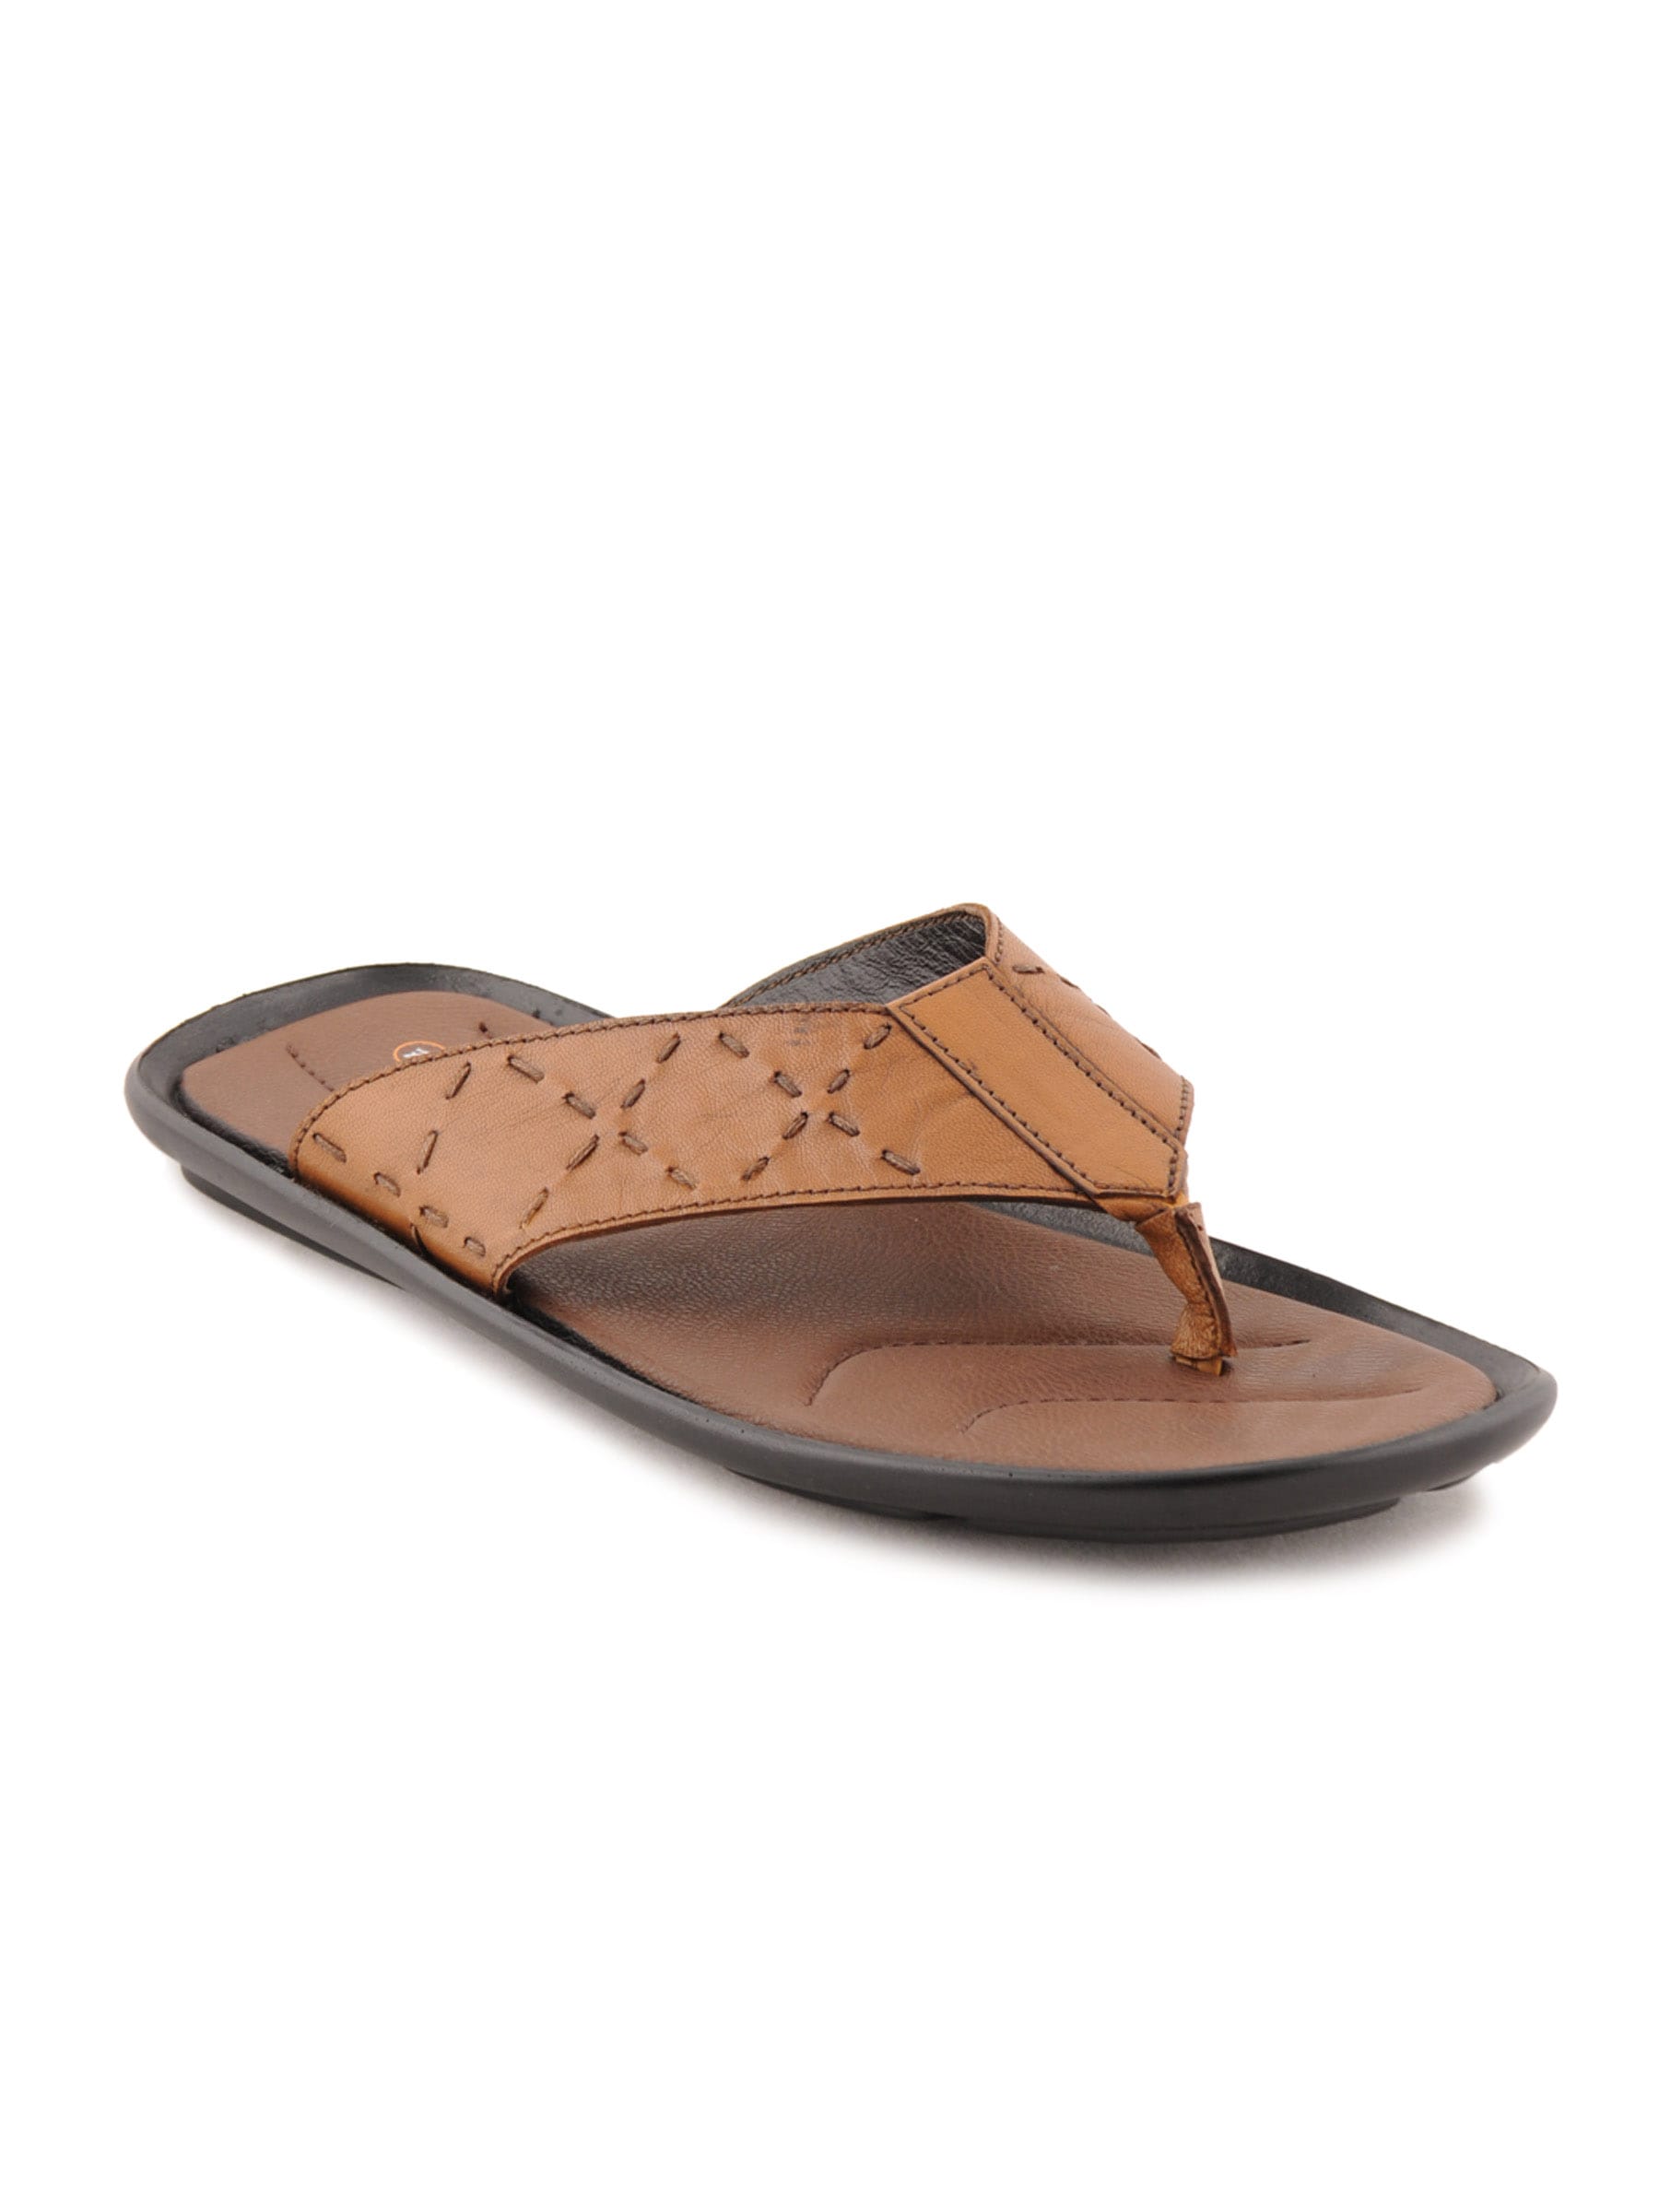 Franco Leone Men Casual Brown Sandals